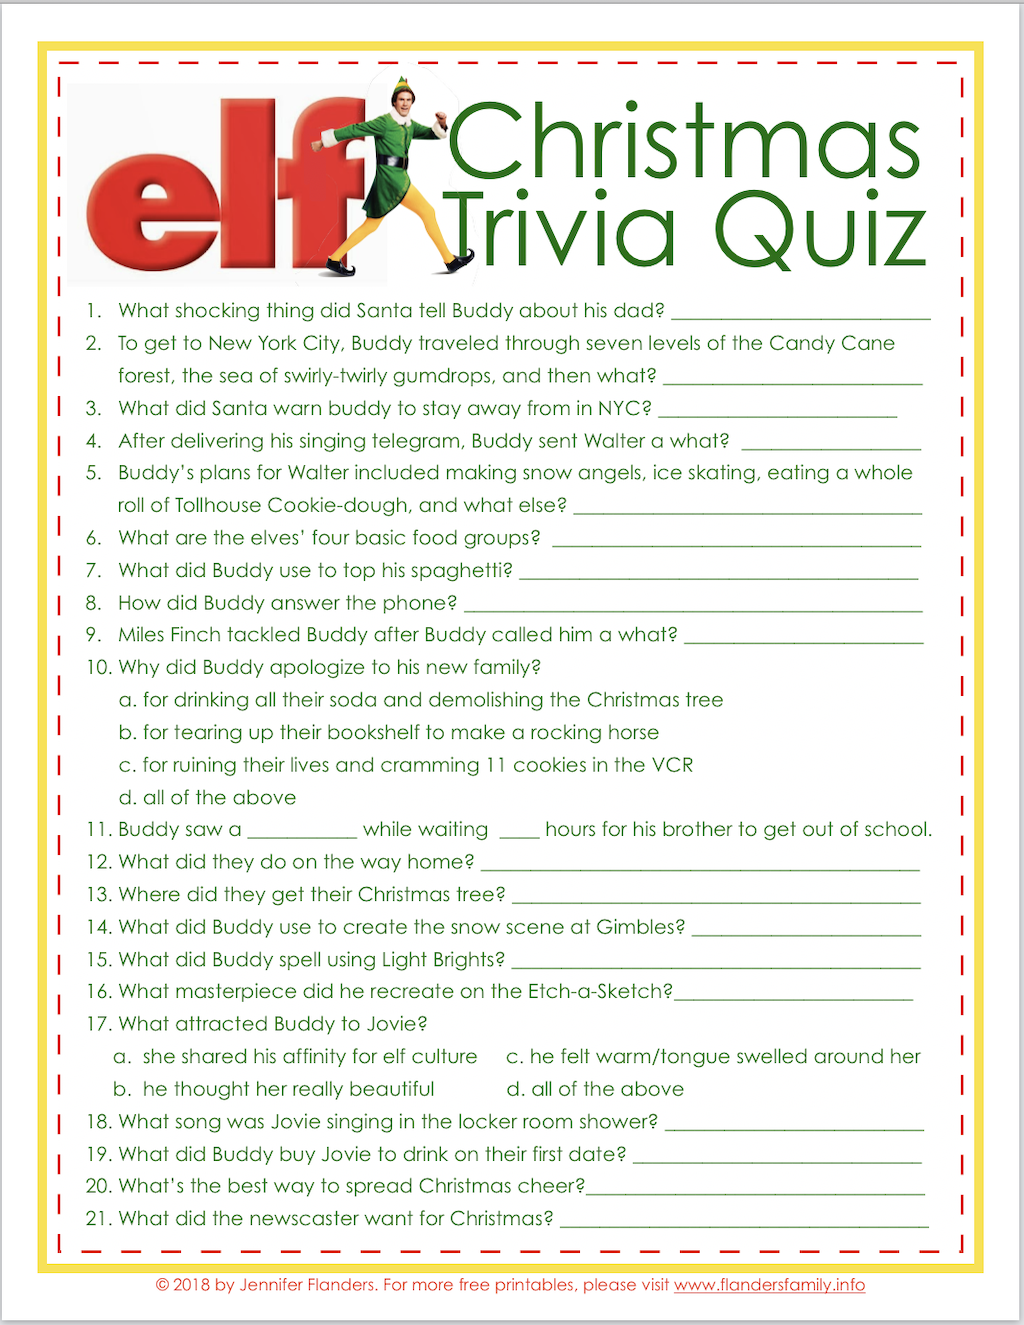 Elf Trivia Christmas Quiz (Free Printable) - Flanders Family Homelife